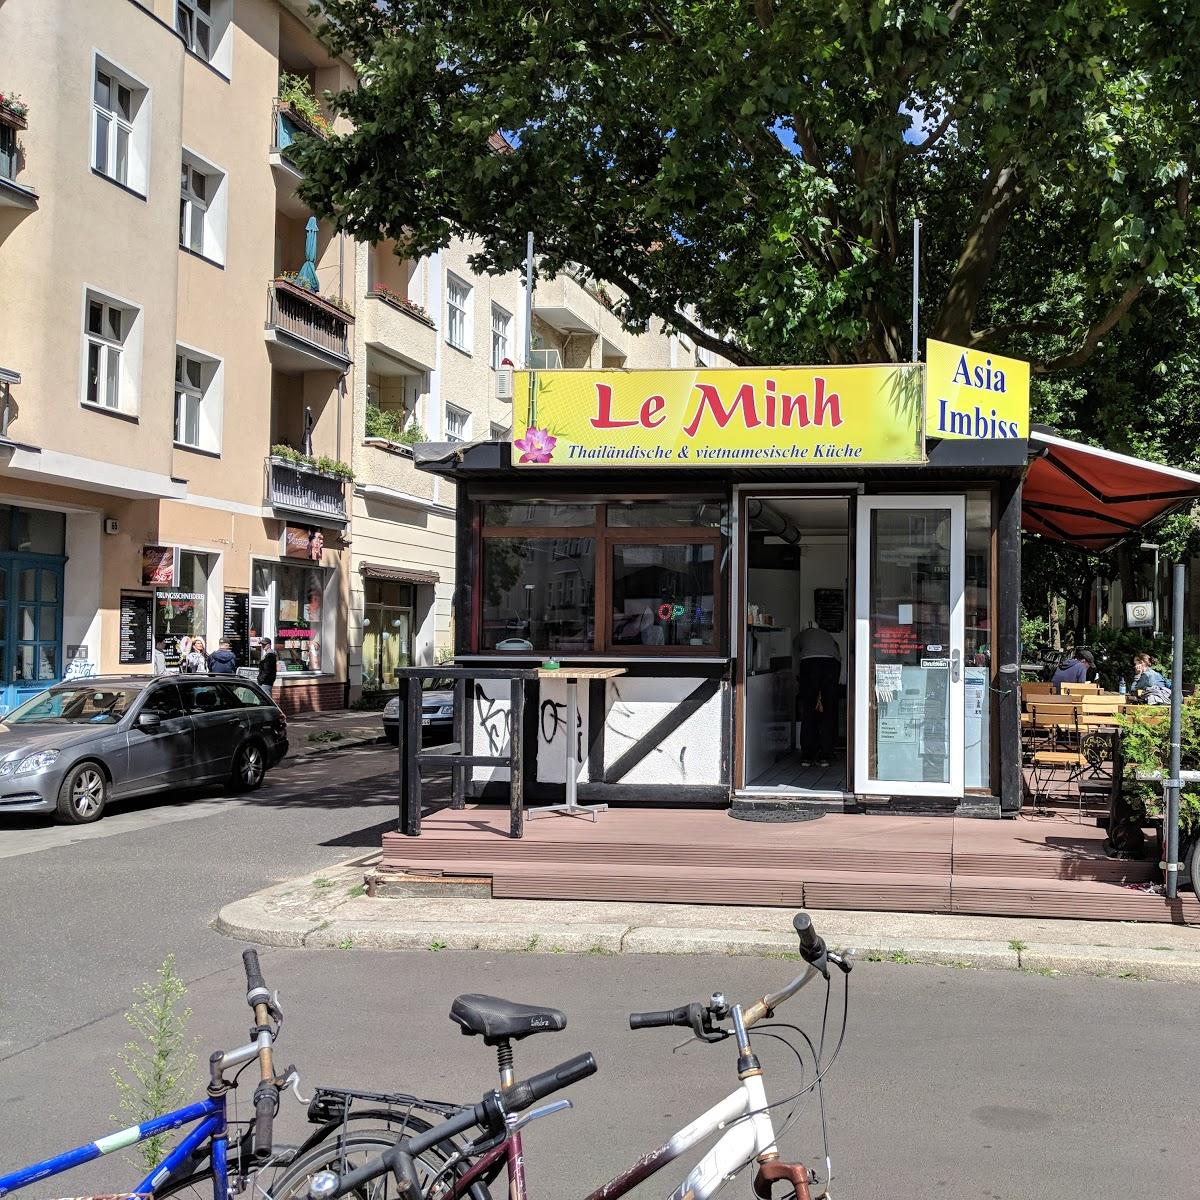 Restaurant "Le Minh" in Berlin